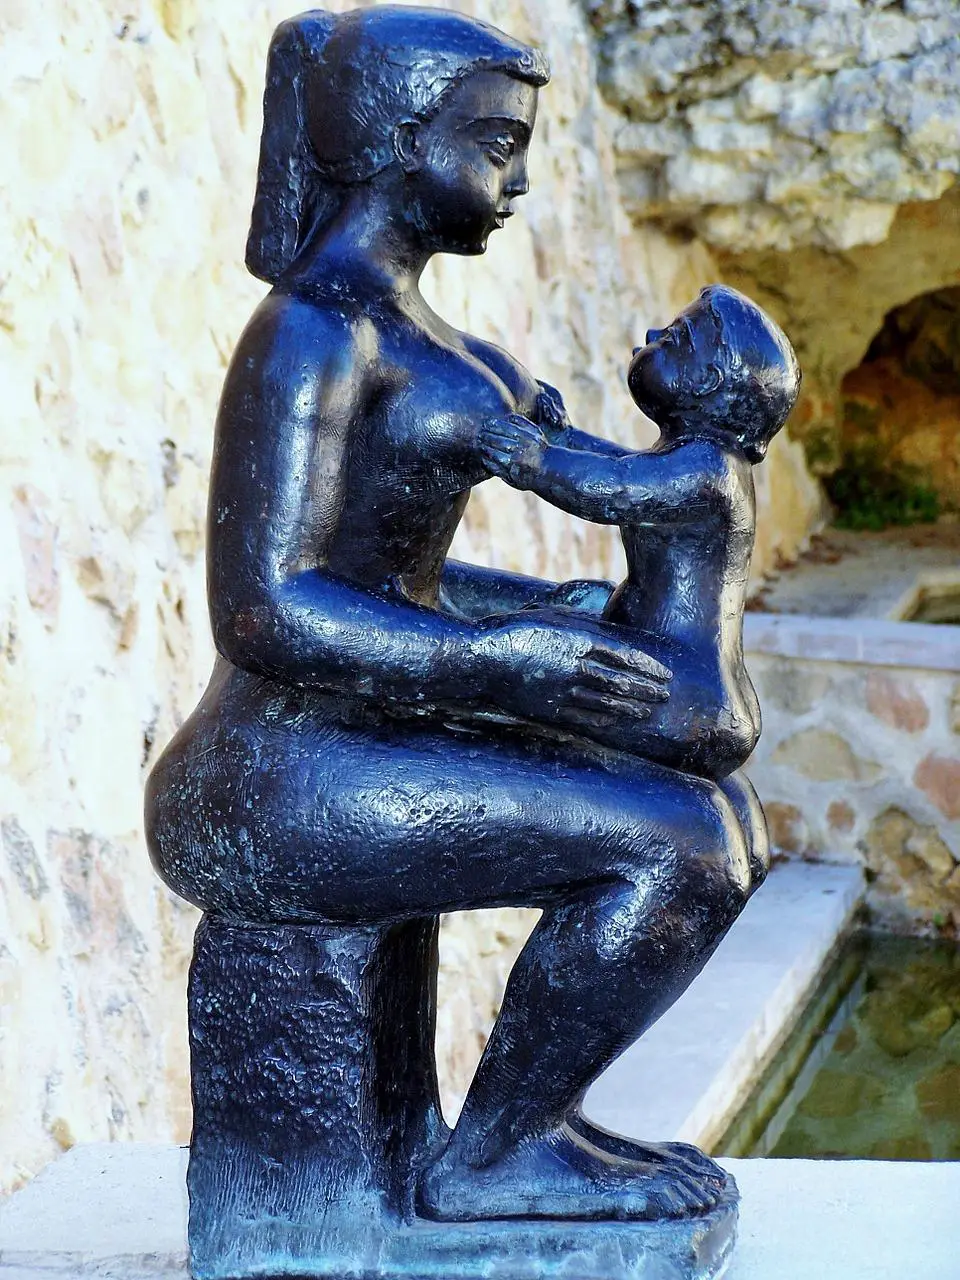 breastfeeding a toddler